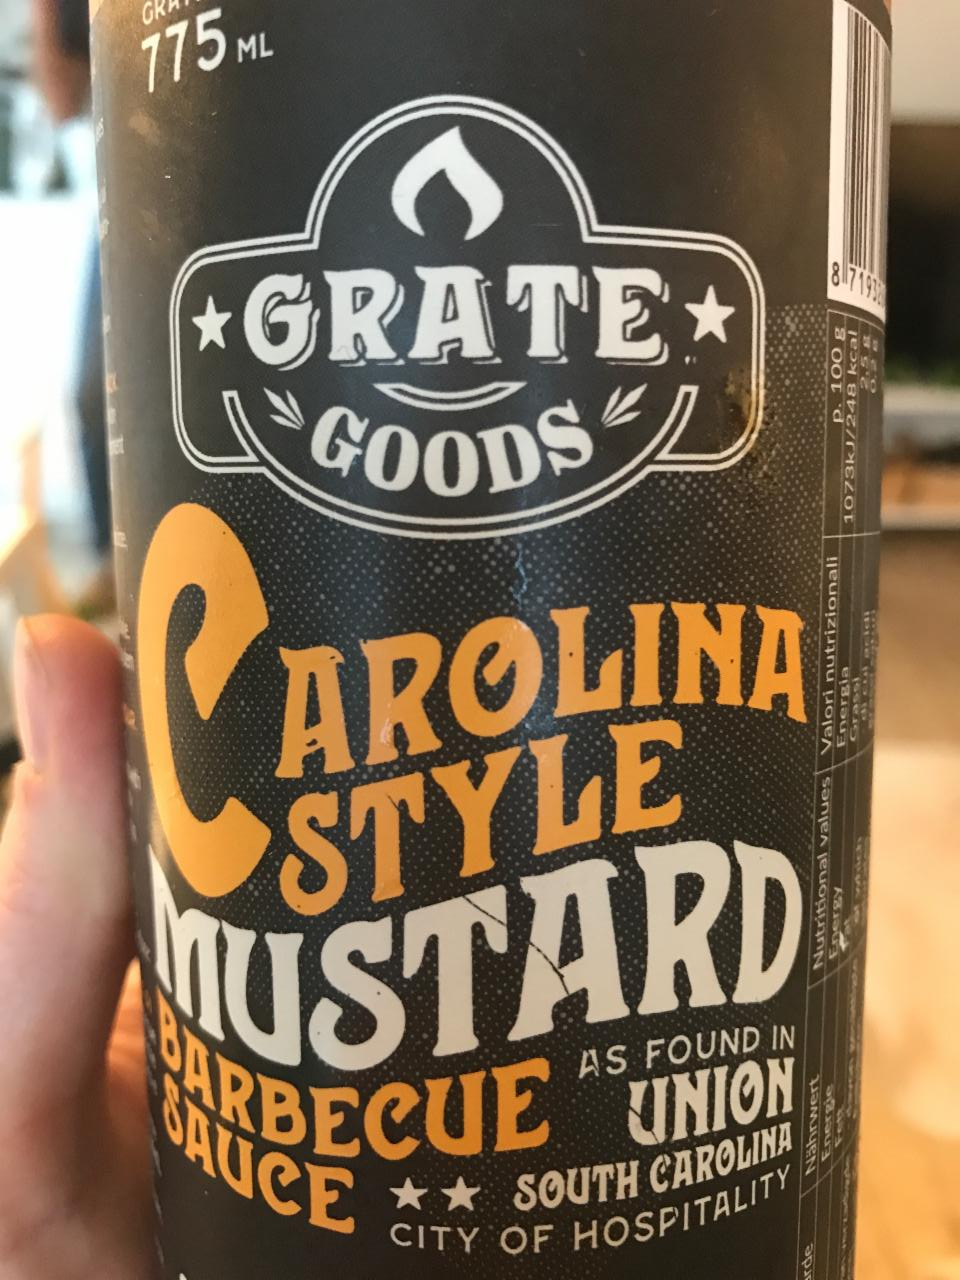 Fotografie - Carolina Style Mustard Barbecue Sauce Grate Goods